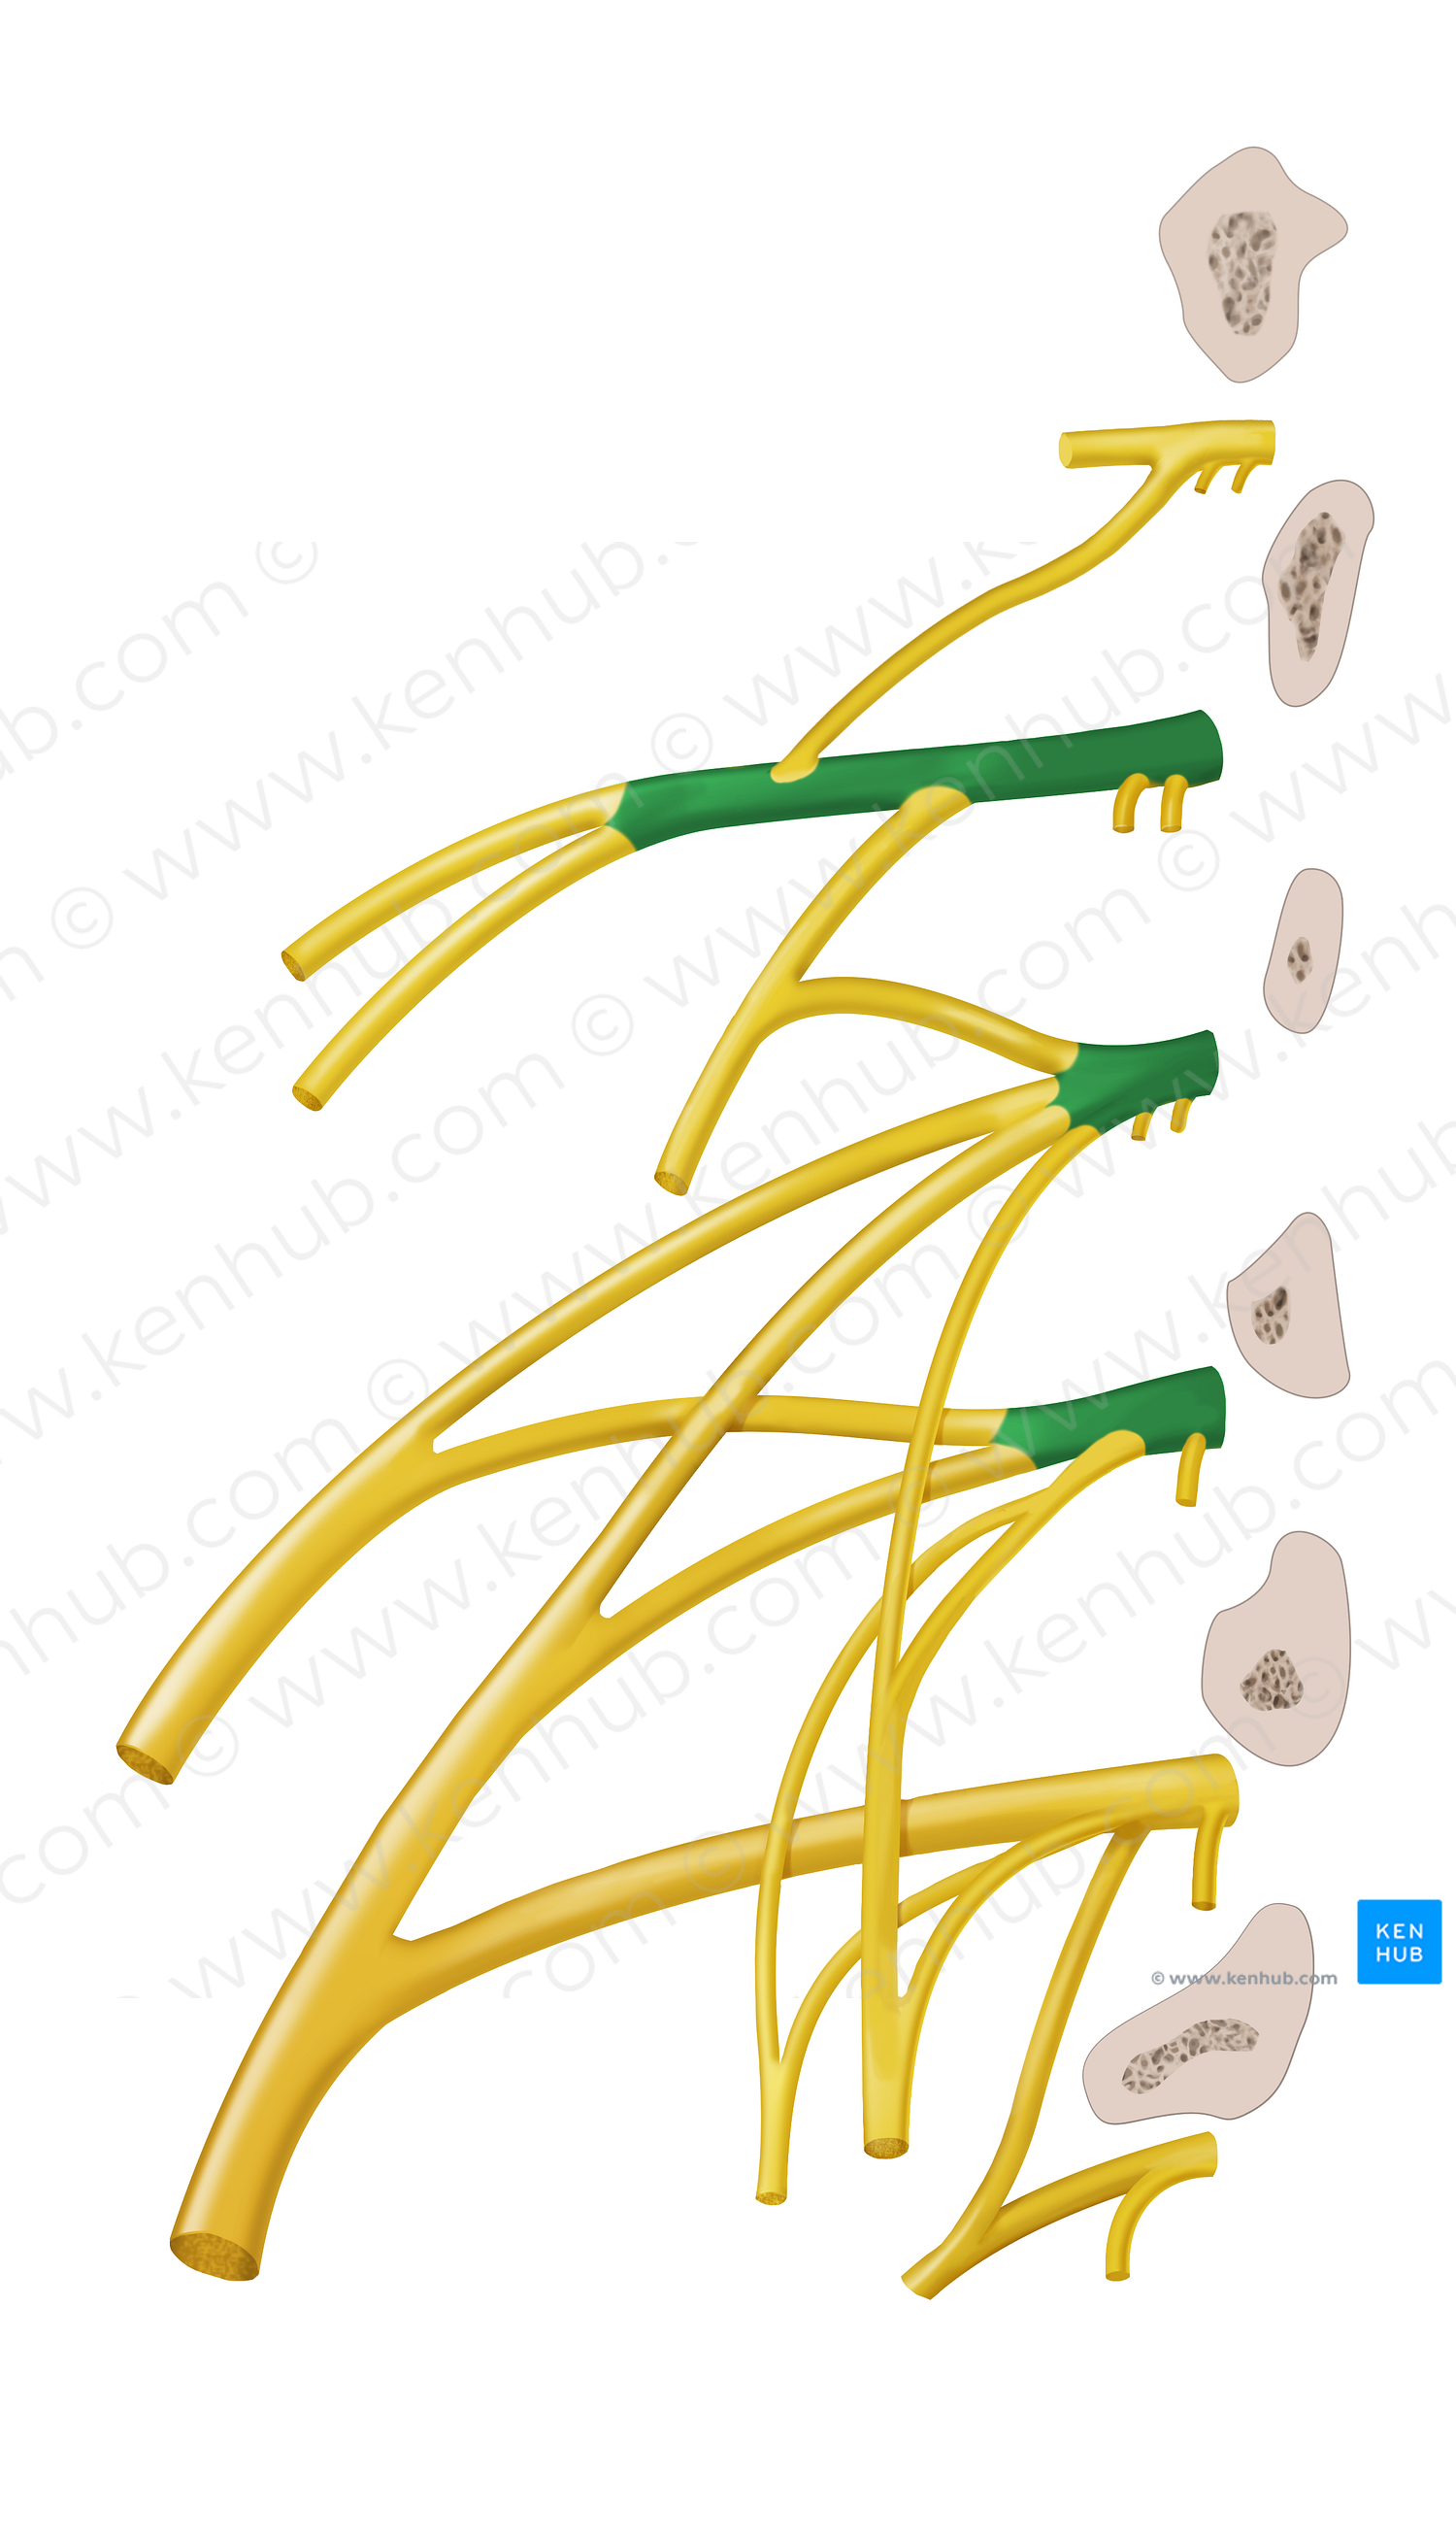 Anterior rami of spinal nerves L1-L3 (#18275)